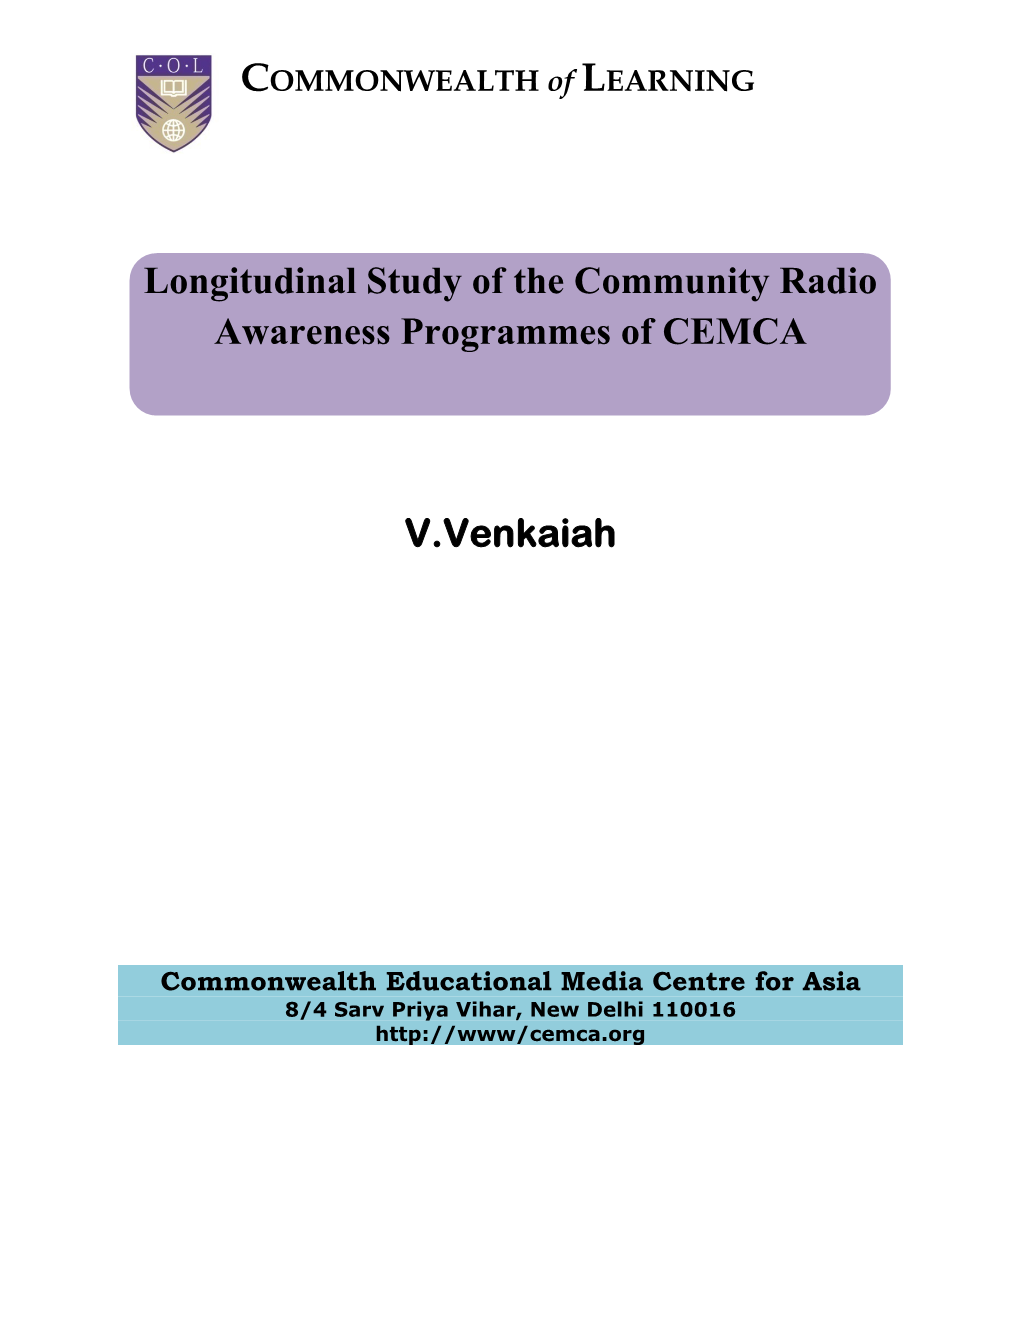 Longitudinal Study of the Community Radio Awareness Programmes of CEMCA